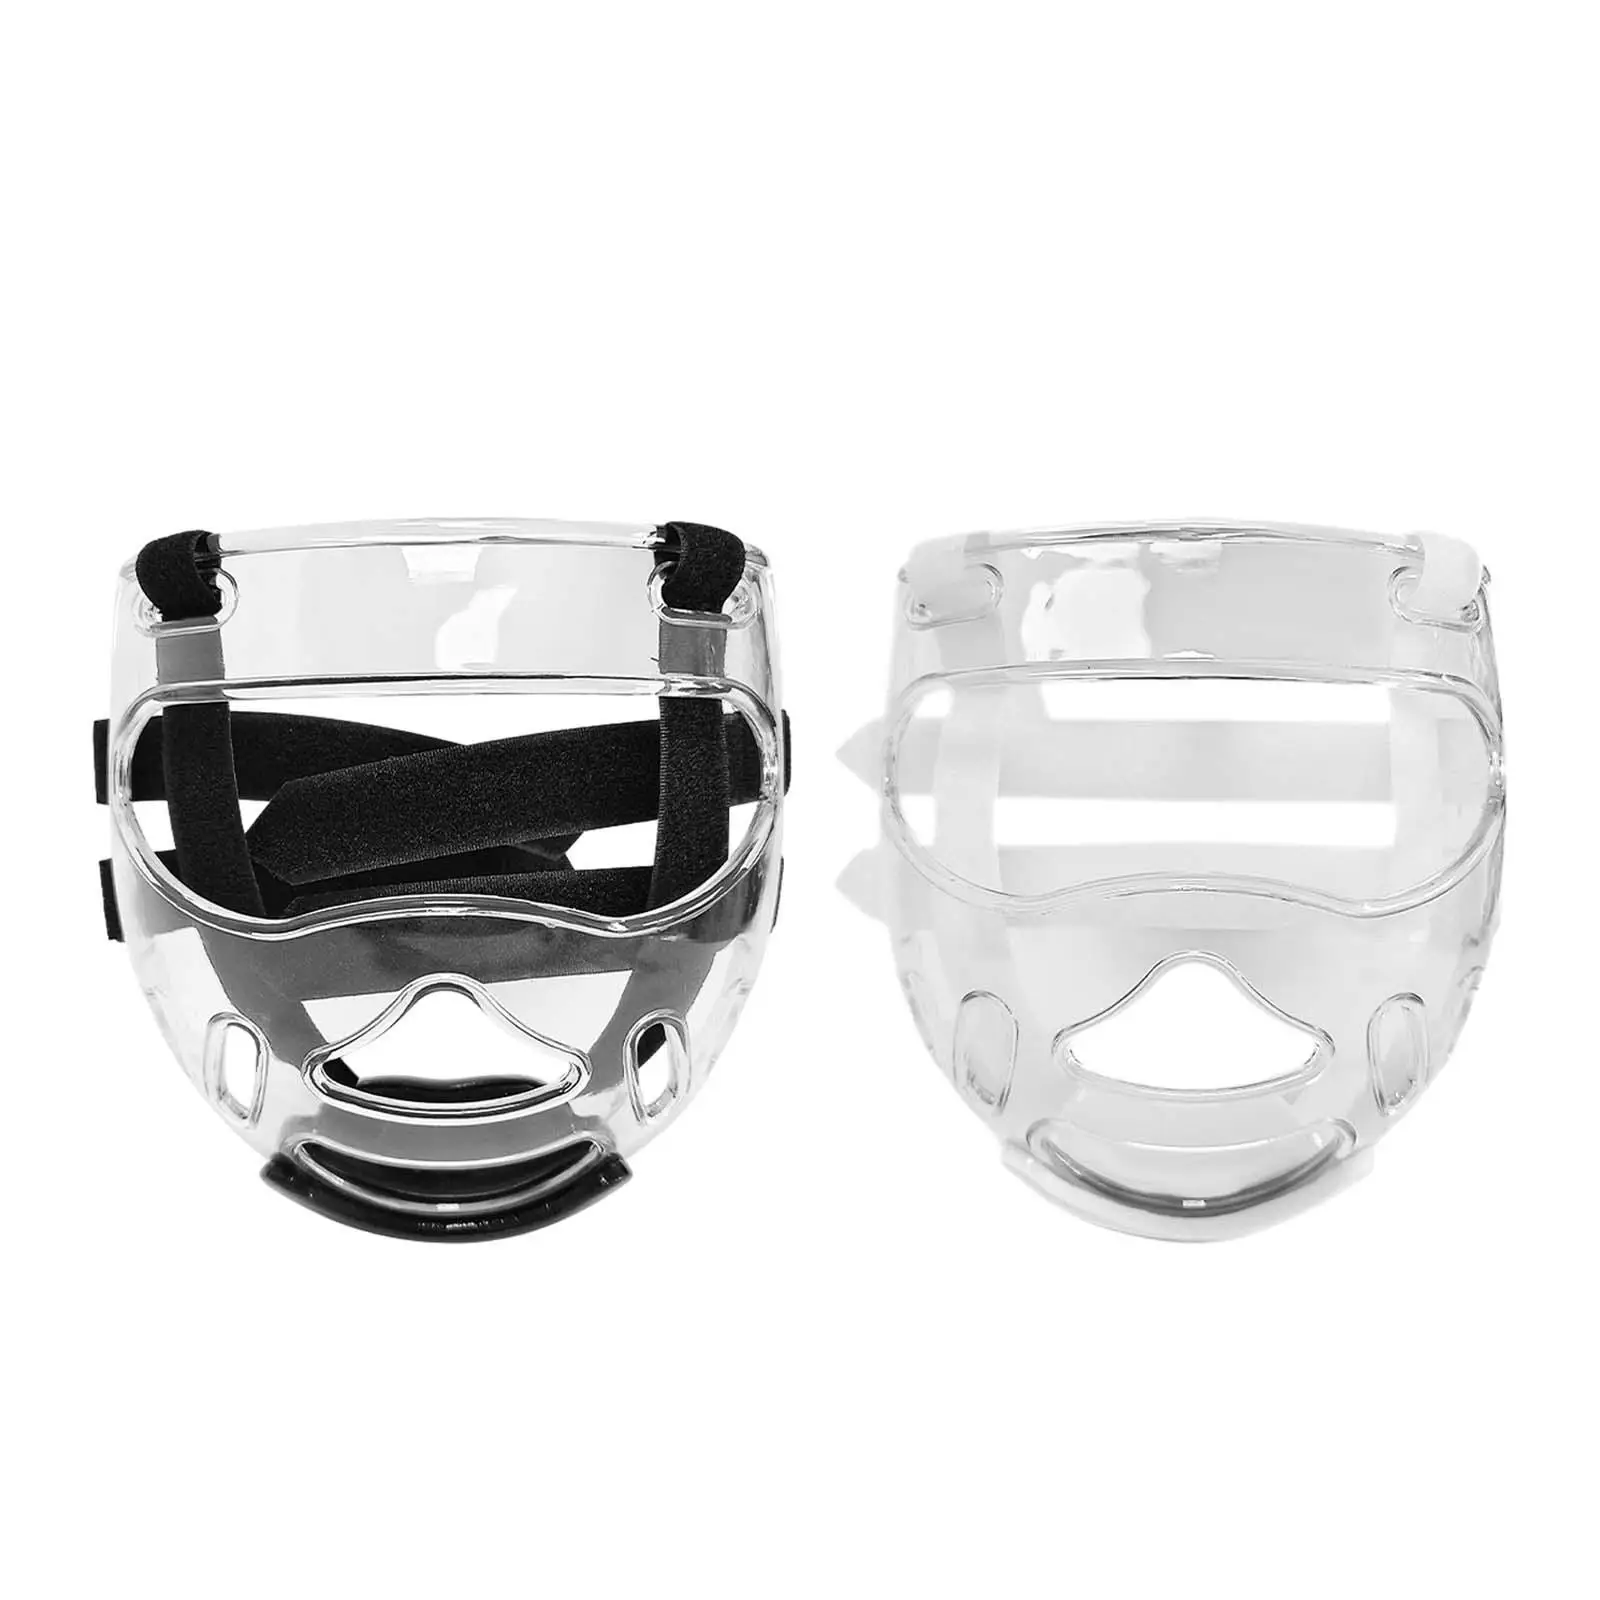 Taekwondo Mask Taekwondo Face Shield Protector Boxing Headgear Head Cover for Kickboxing Wrestling Sports Sanda Martial Arts